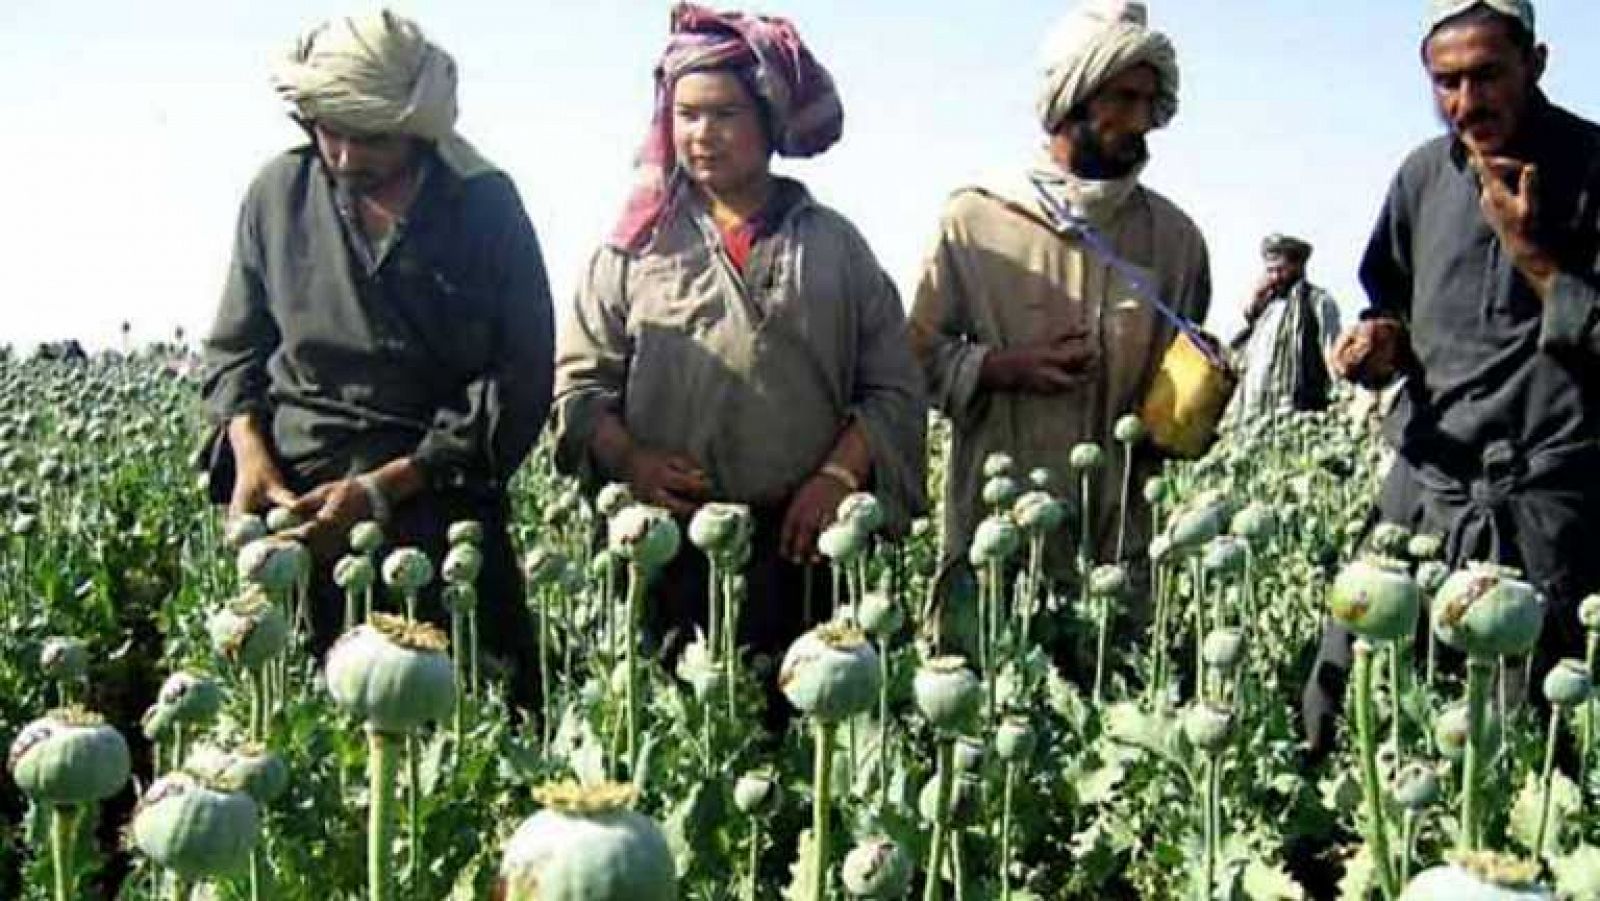 La noche temática - La ruta del opio afgano